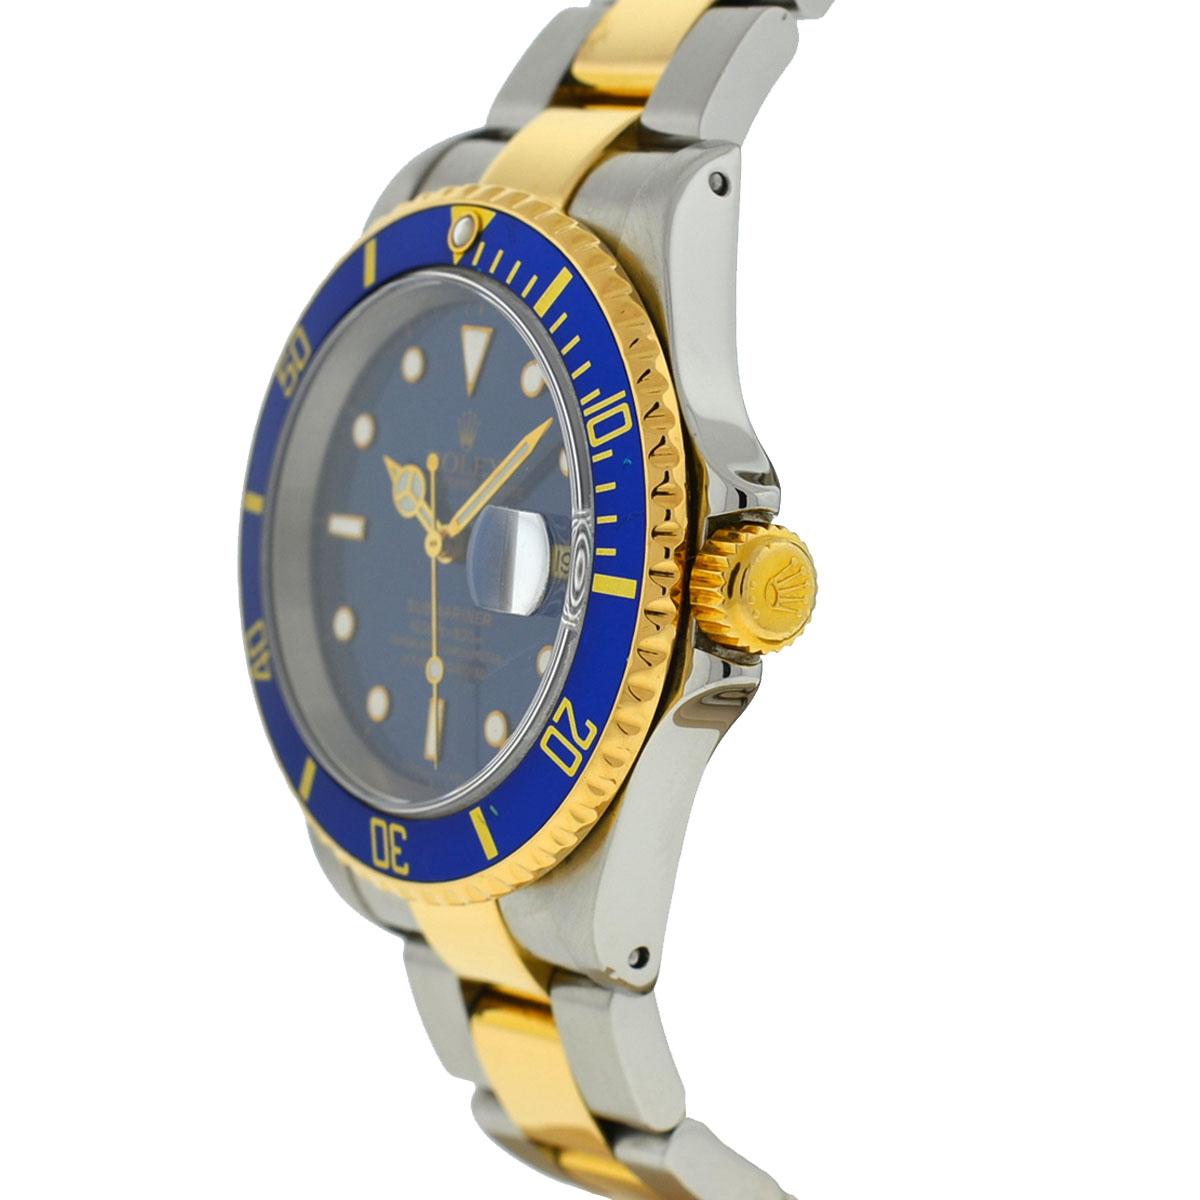 Company-Rolex
Model-16613 Two Tone Submariner Blue Dial Men's Watch 
Case Metal-Two Tone 
Case Measurement-40mm
Bracelet-Two Tone 
Size -Fits 7